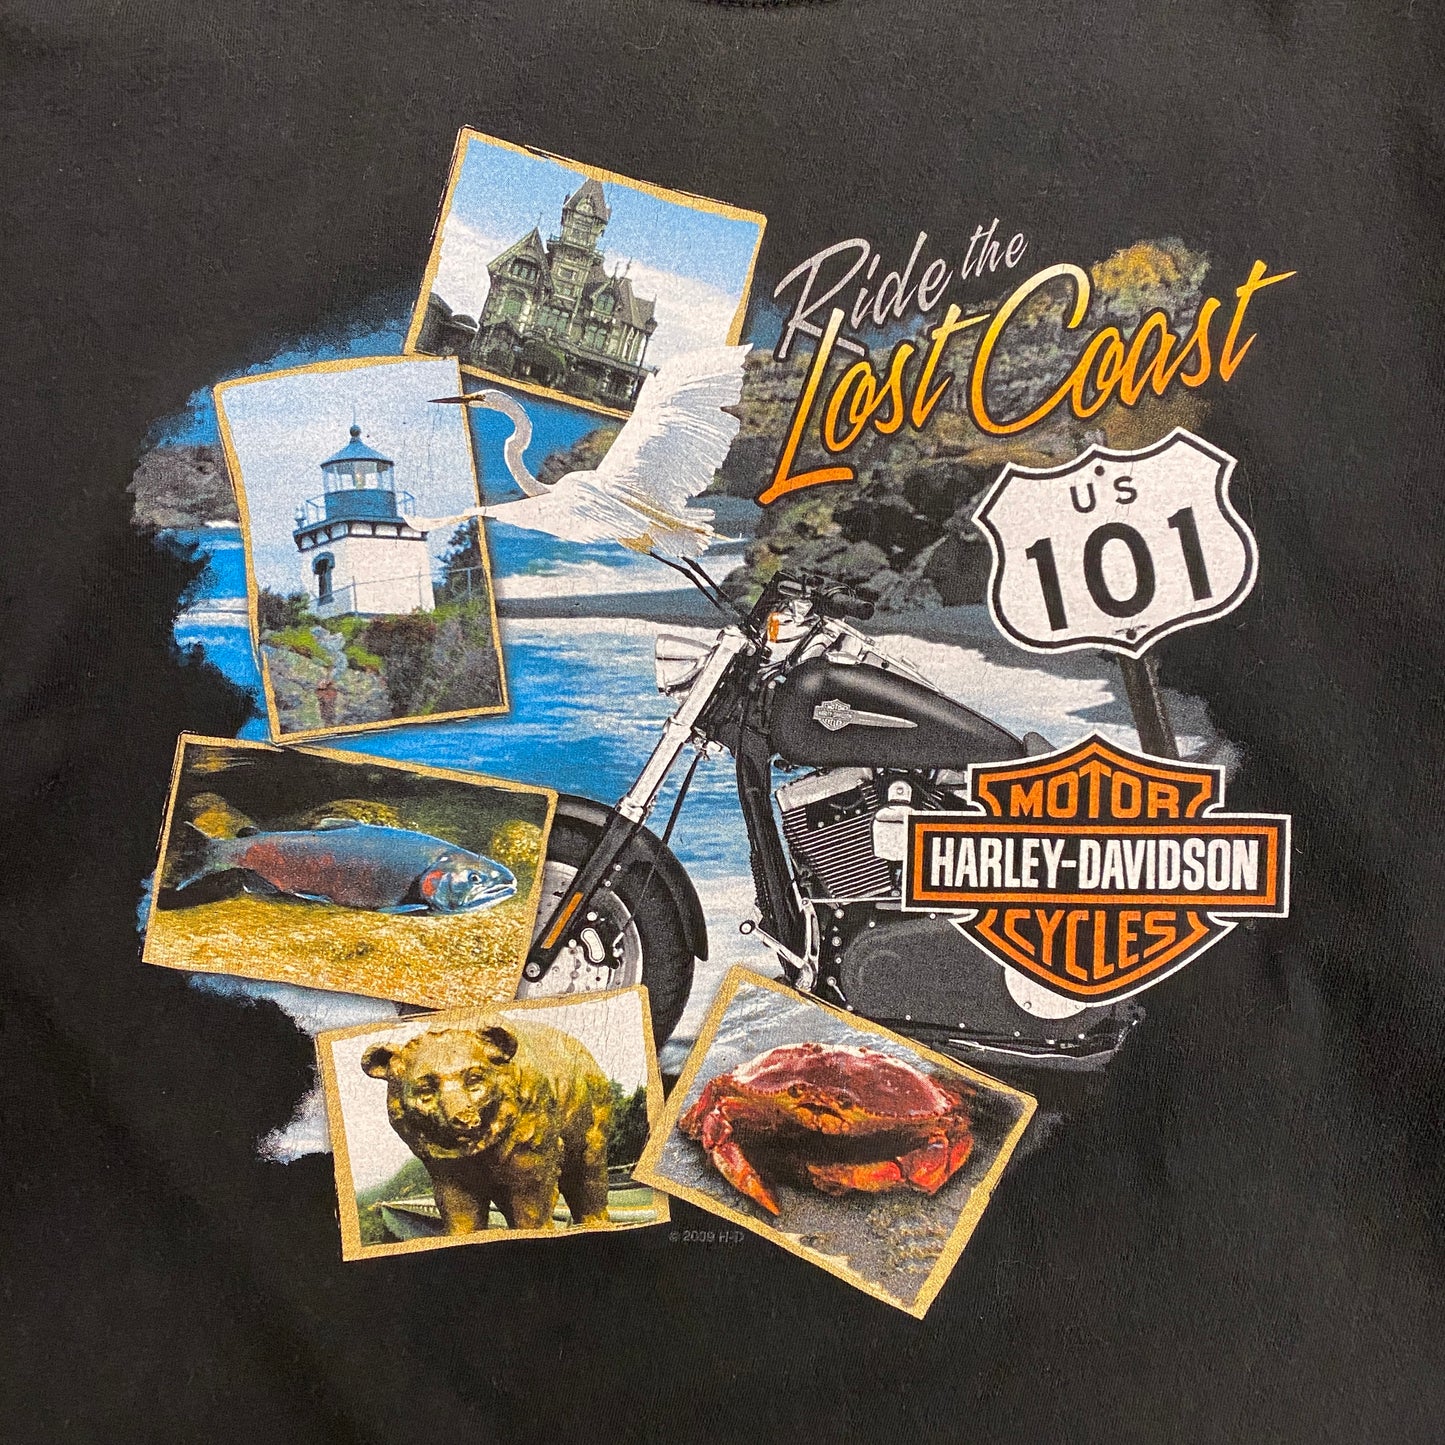 Harley Davidson "Ride the Lost Coast" Eureka CA Long Sleeve Tee - Size Large